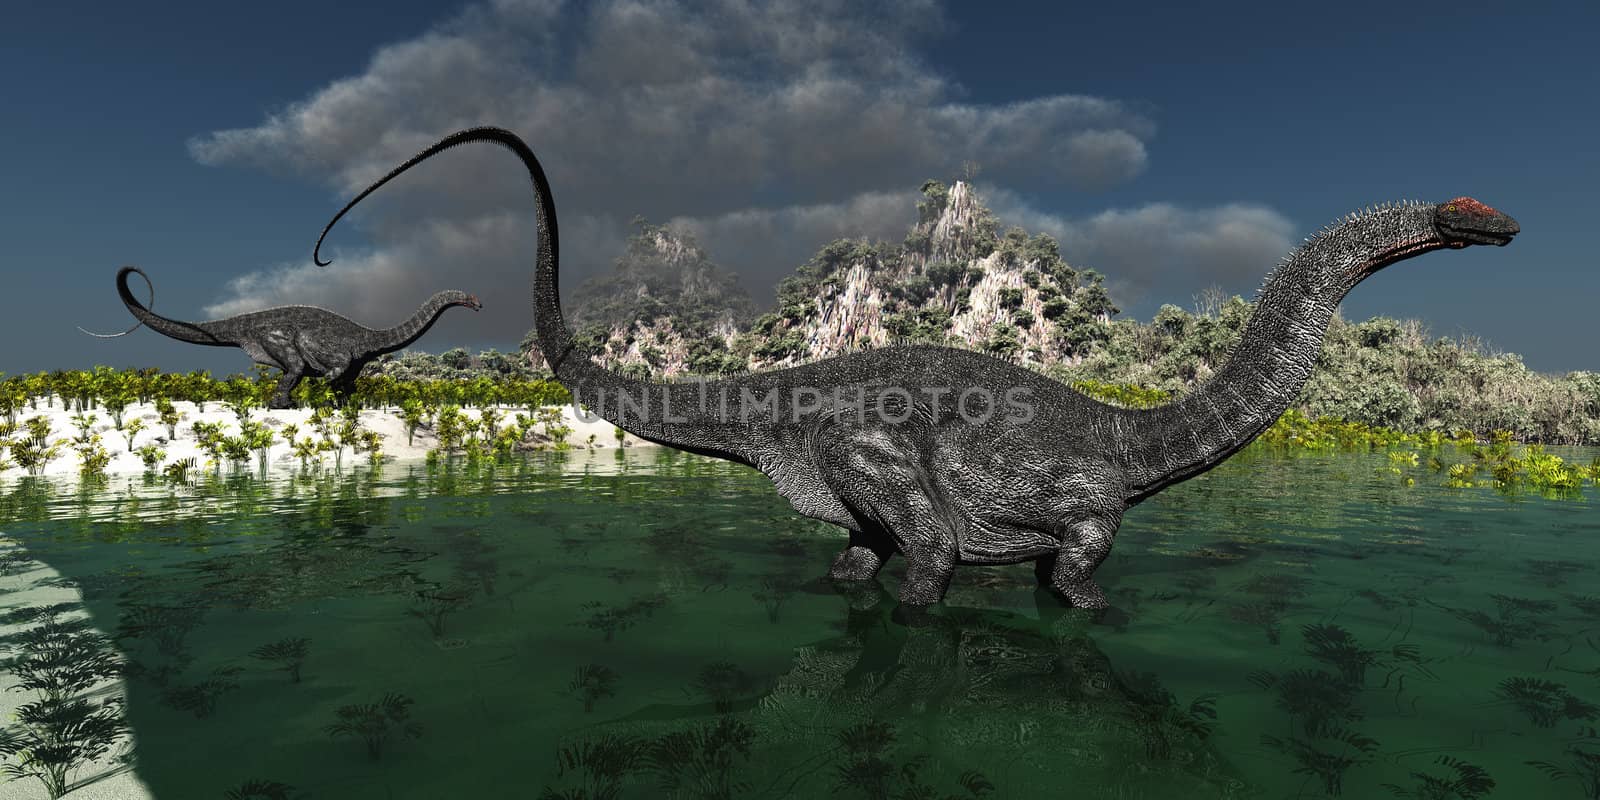 Apatasaurus by Catmando